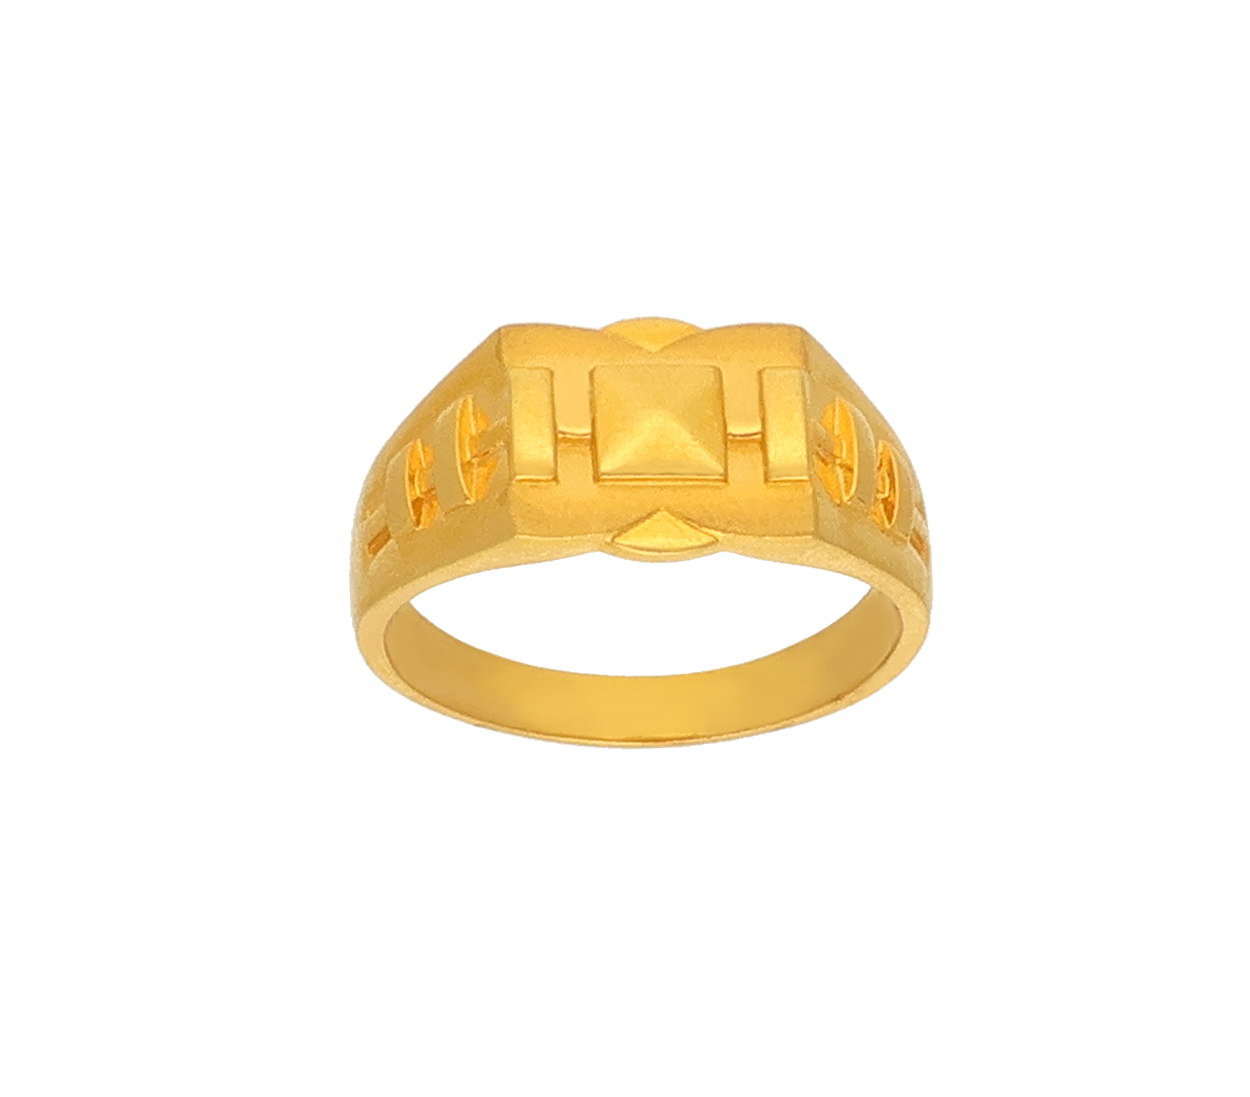 Perennial Men's Ring - Buy Certified Gold & Diamond Rings Online |  KuberBox.com - KuberBox.com